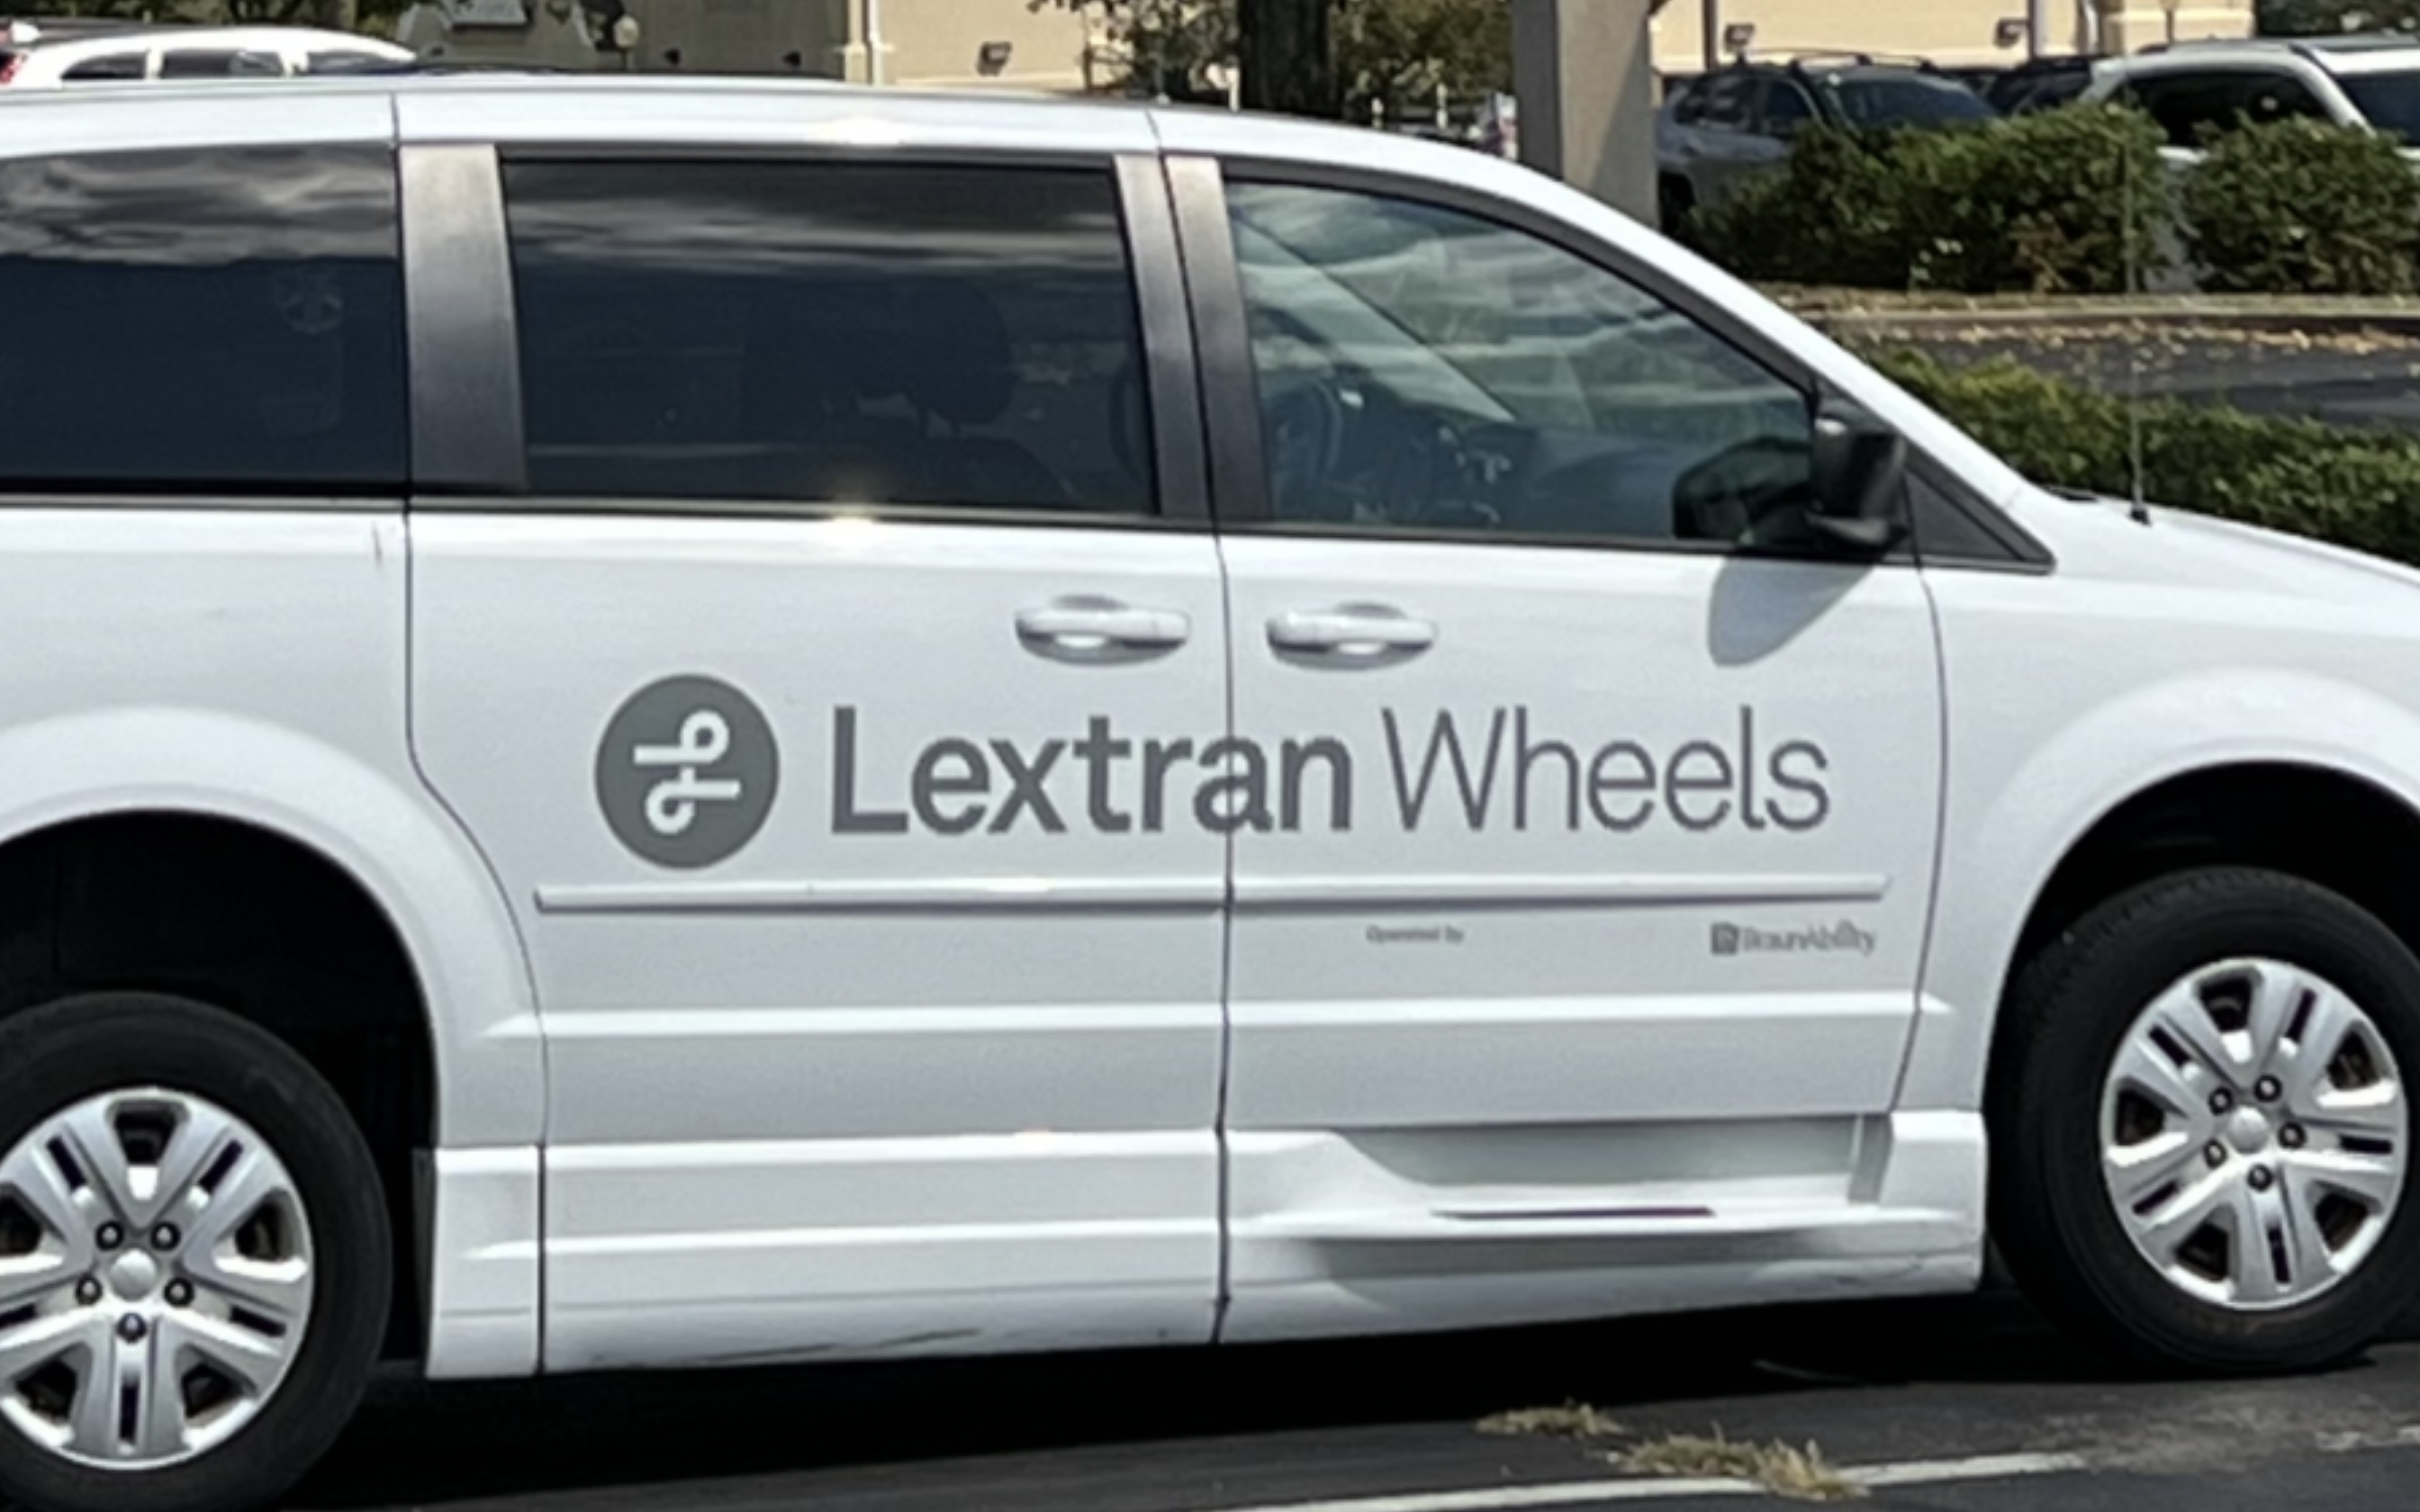 Report: Lexington's 'Wheels' paratransit service leaves its most vulnerable behind